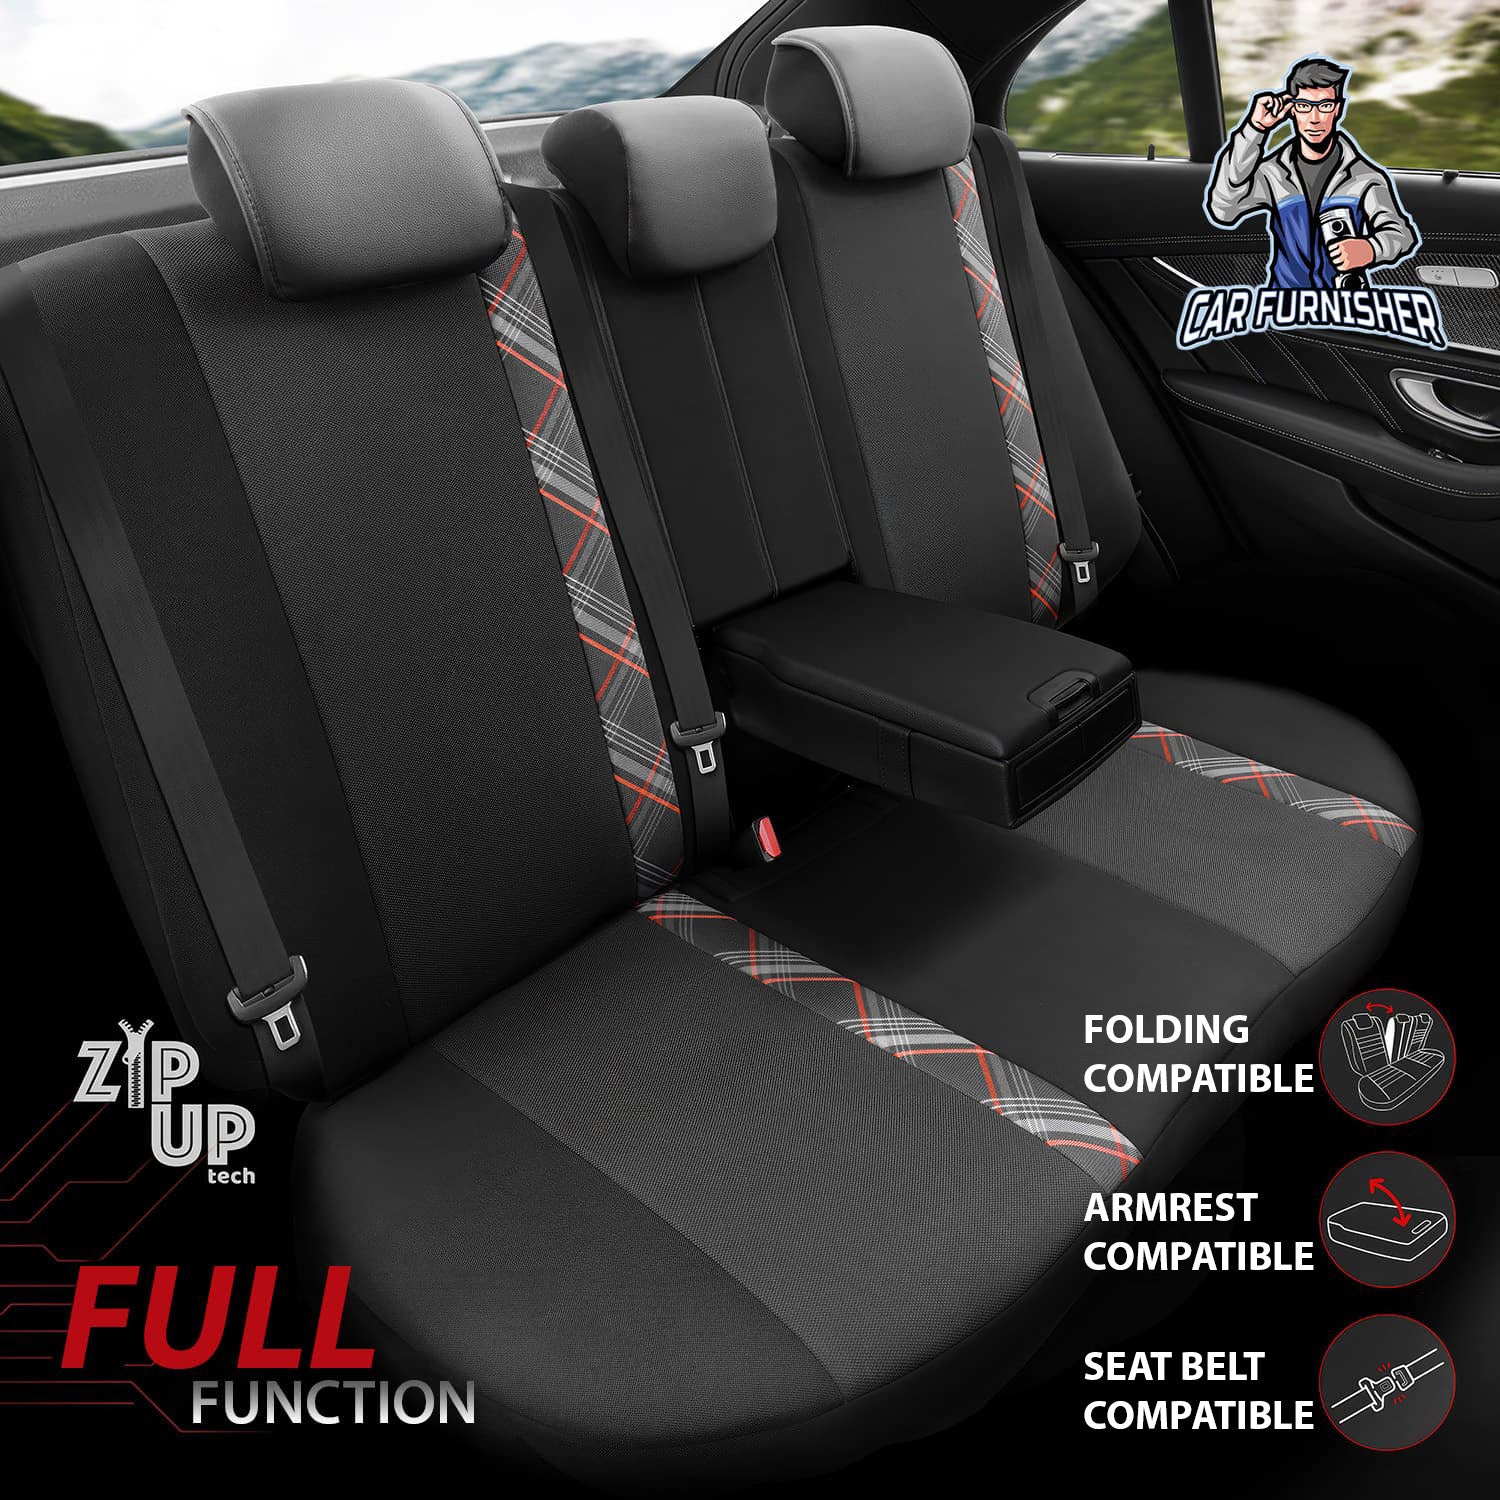 Car Seat Cover Set - Horizon Design Red 5 Seats + Headrests (Full Set) Leather & Jacquard Fabric